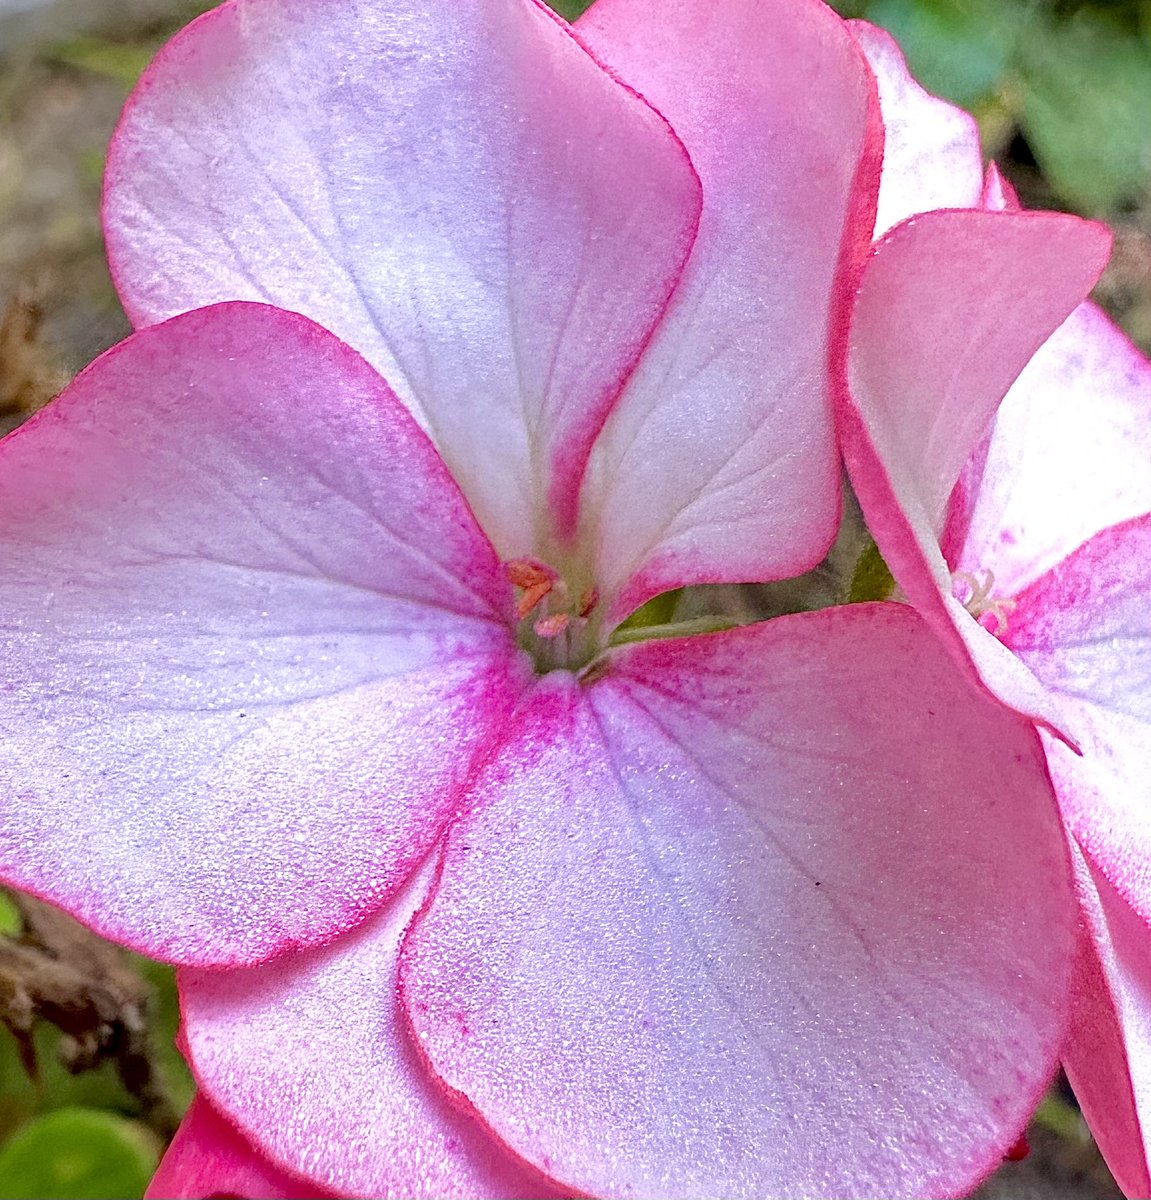 #AlphabetChallenge #WeekP 

P is for “Pink” flower.